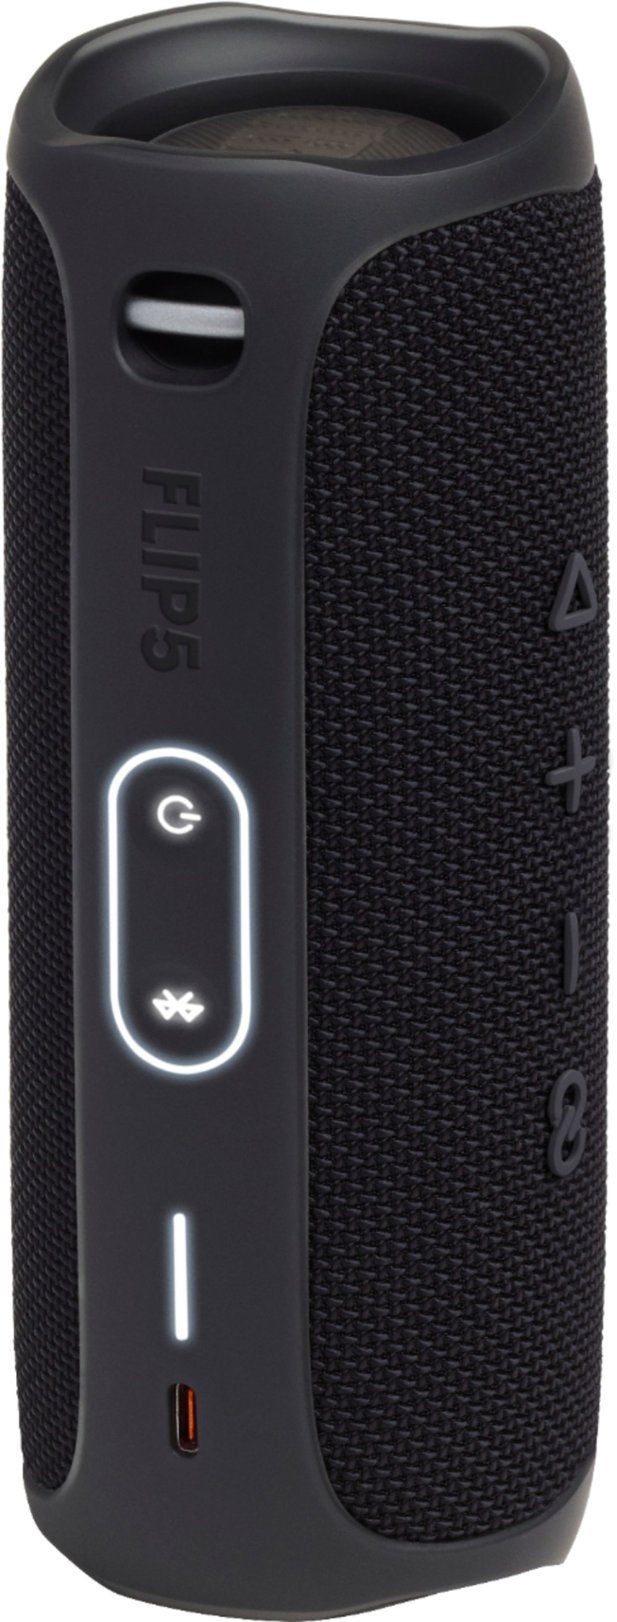 JBL Flip 5 Waterproof Wireless Portable Bluetooth Speaker - GG - Black (Refurbished)